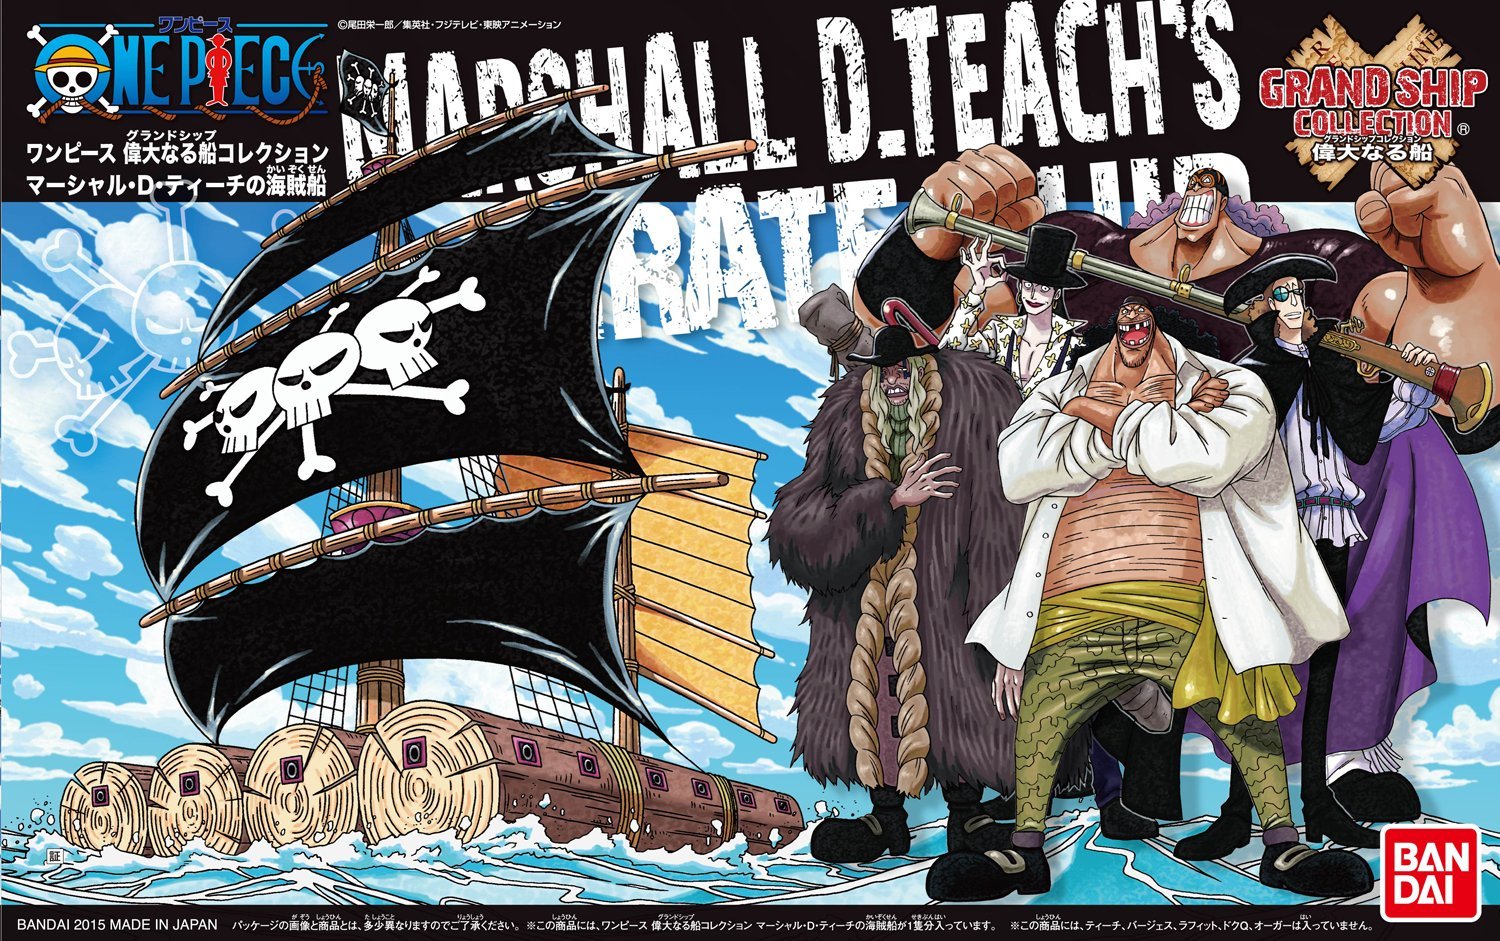 Marshall D. Teach Pirate Ship: Grand Ship Collection  